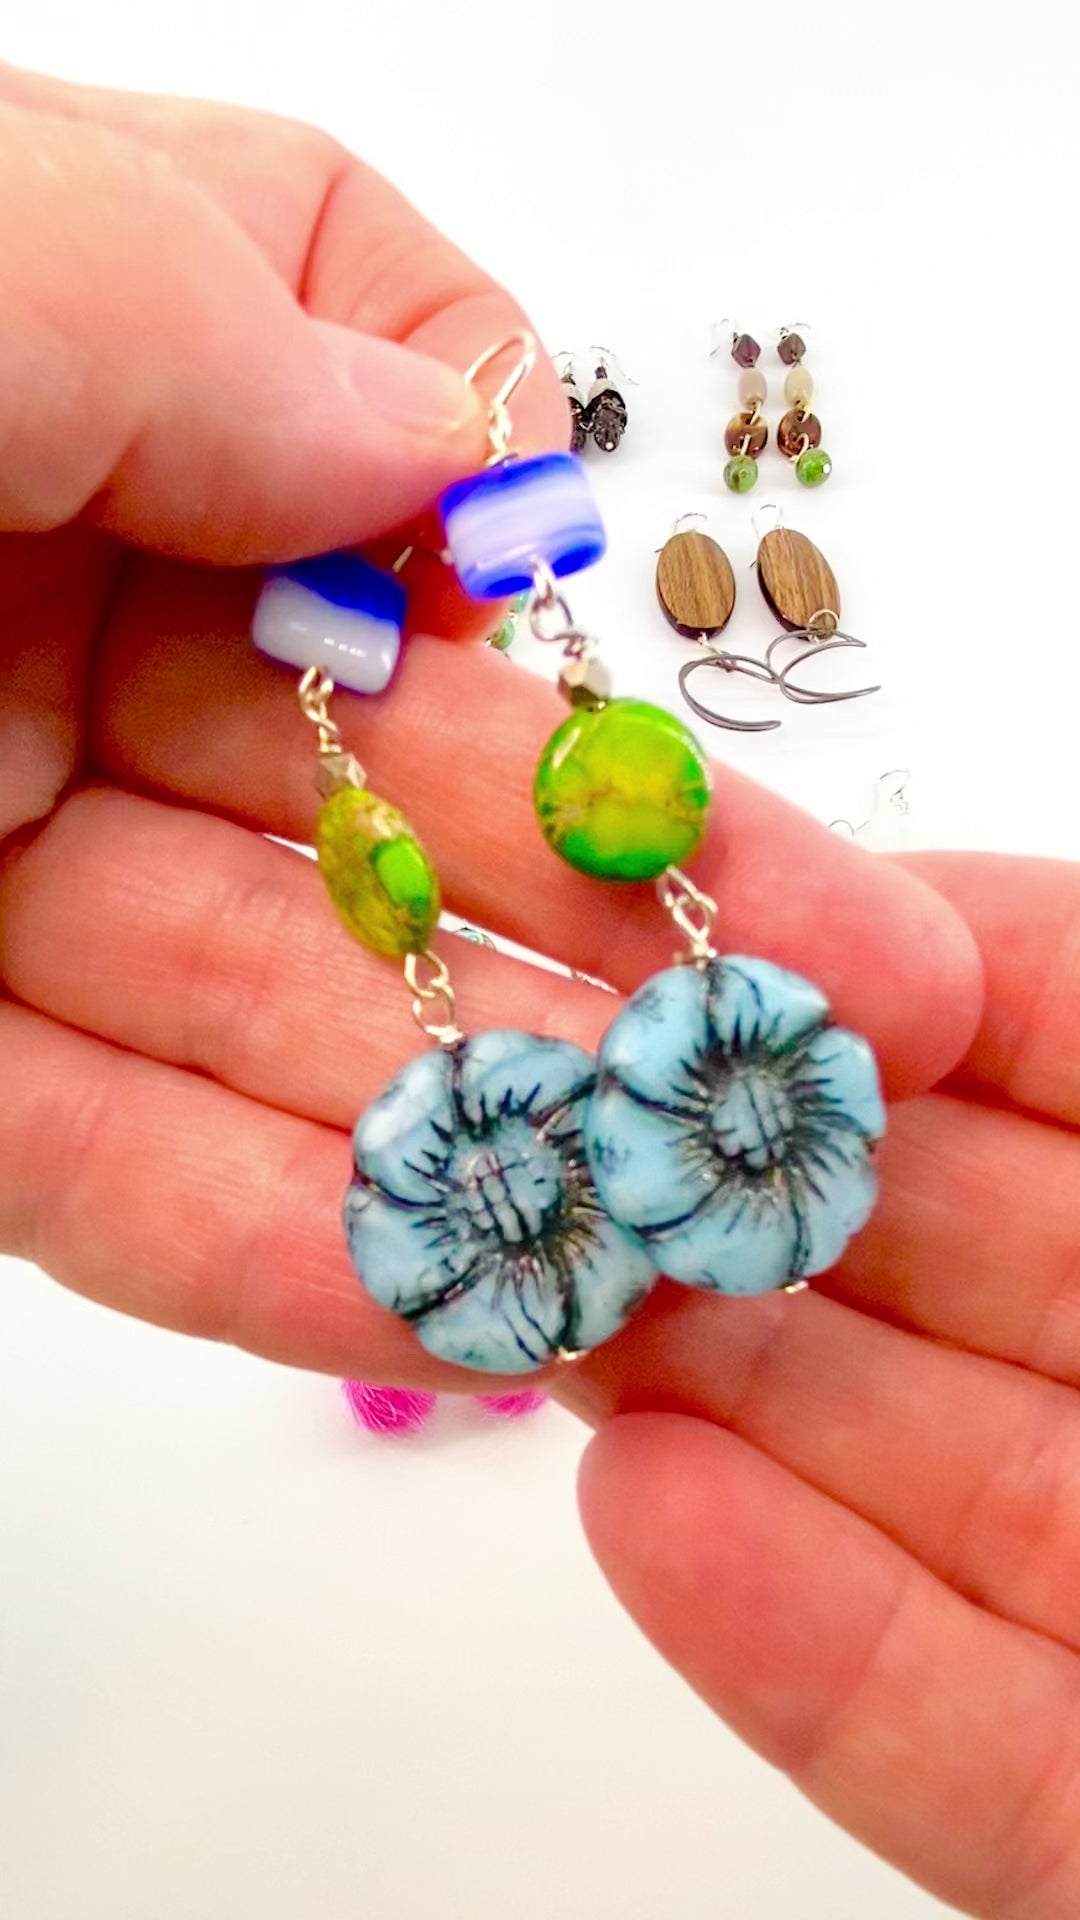 Czech Glass Earrings with Artisan Flower Beads, Mint Green and